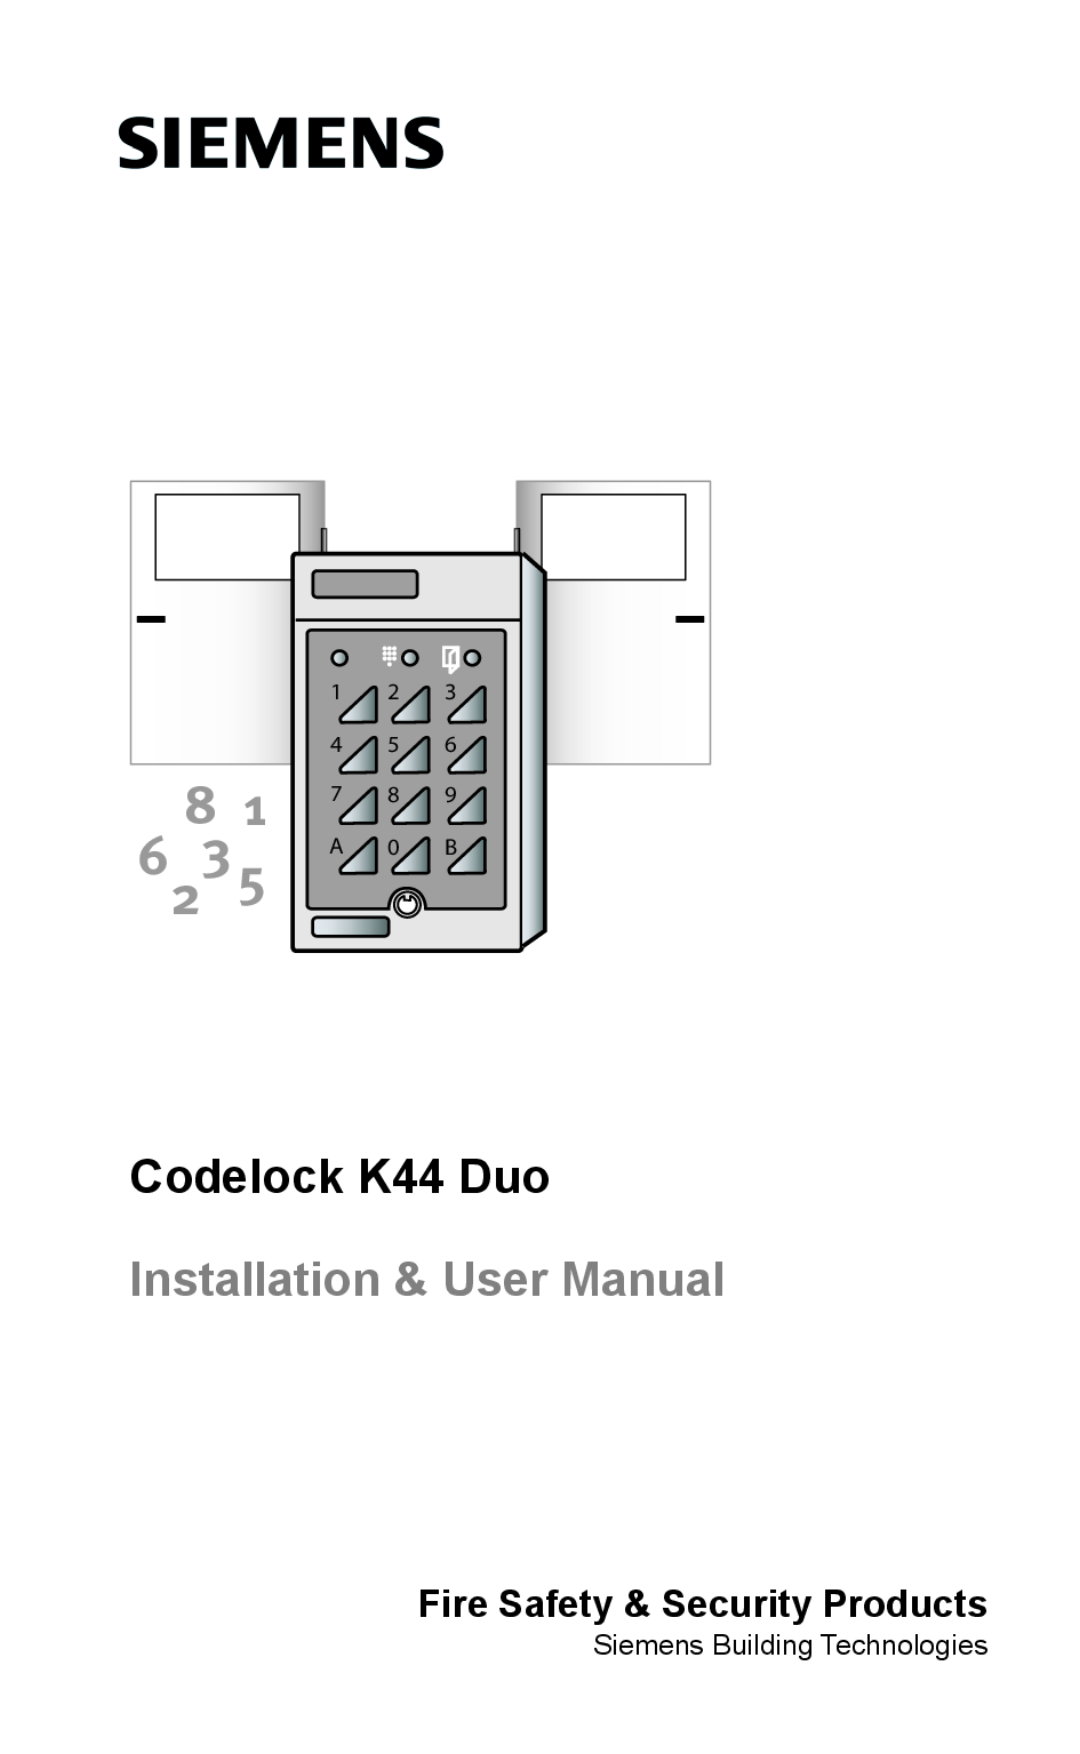 Siemens user manual 81 623, Codelock K44 Duo, Installation & User Manual 